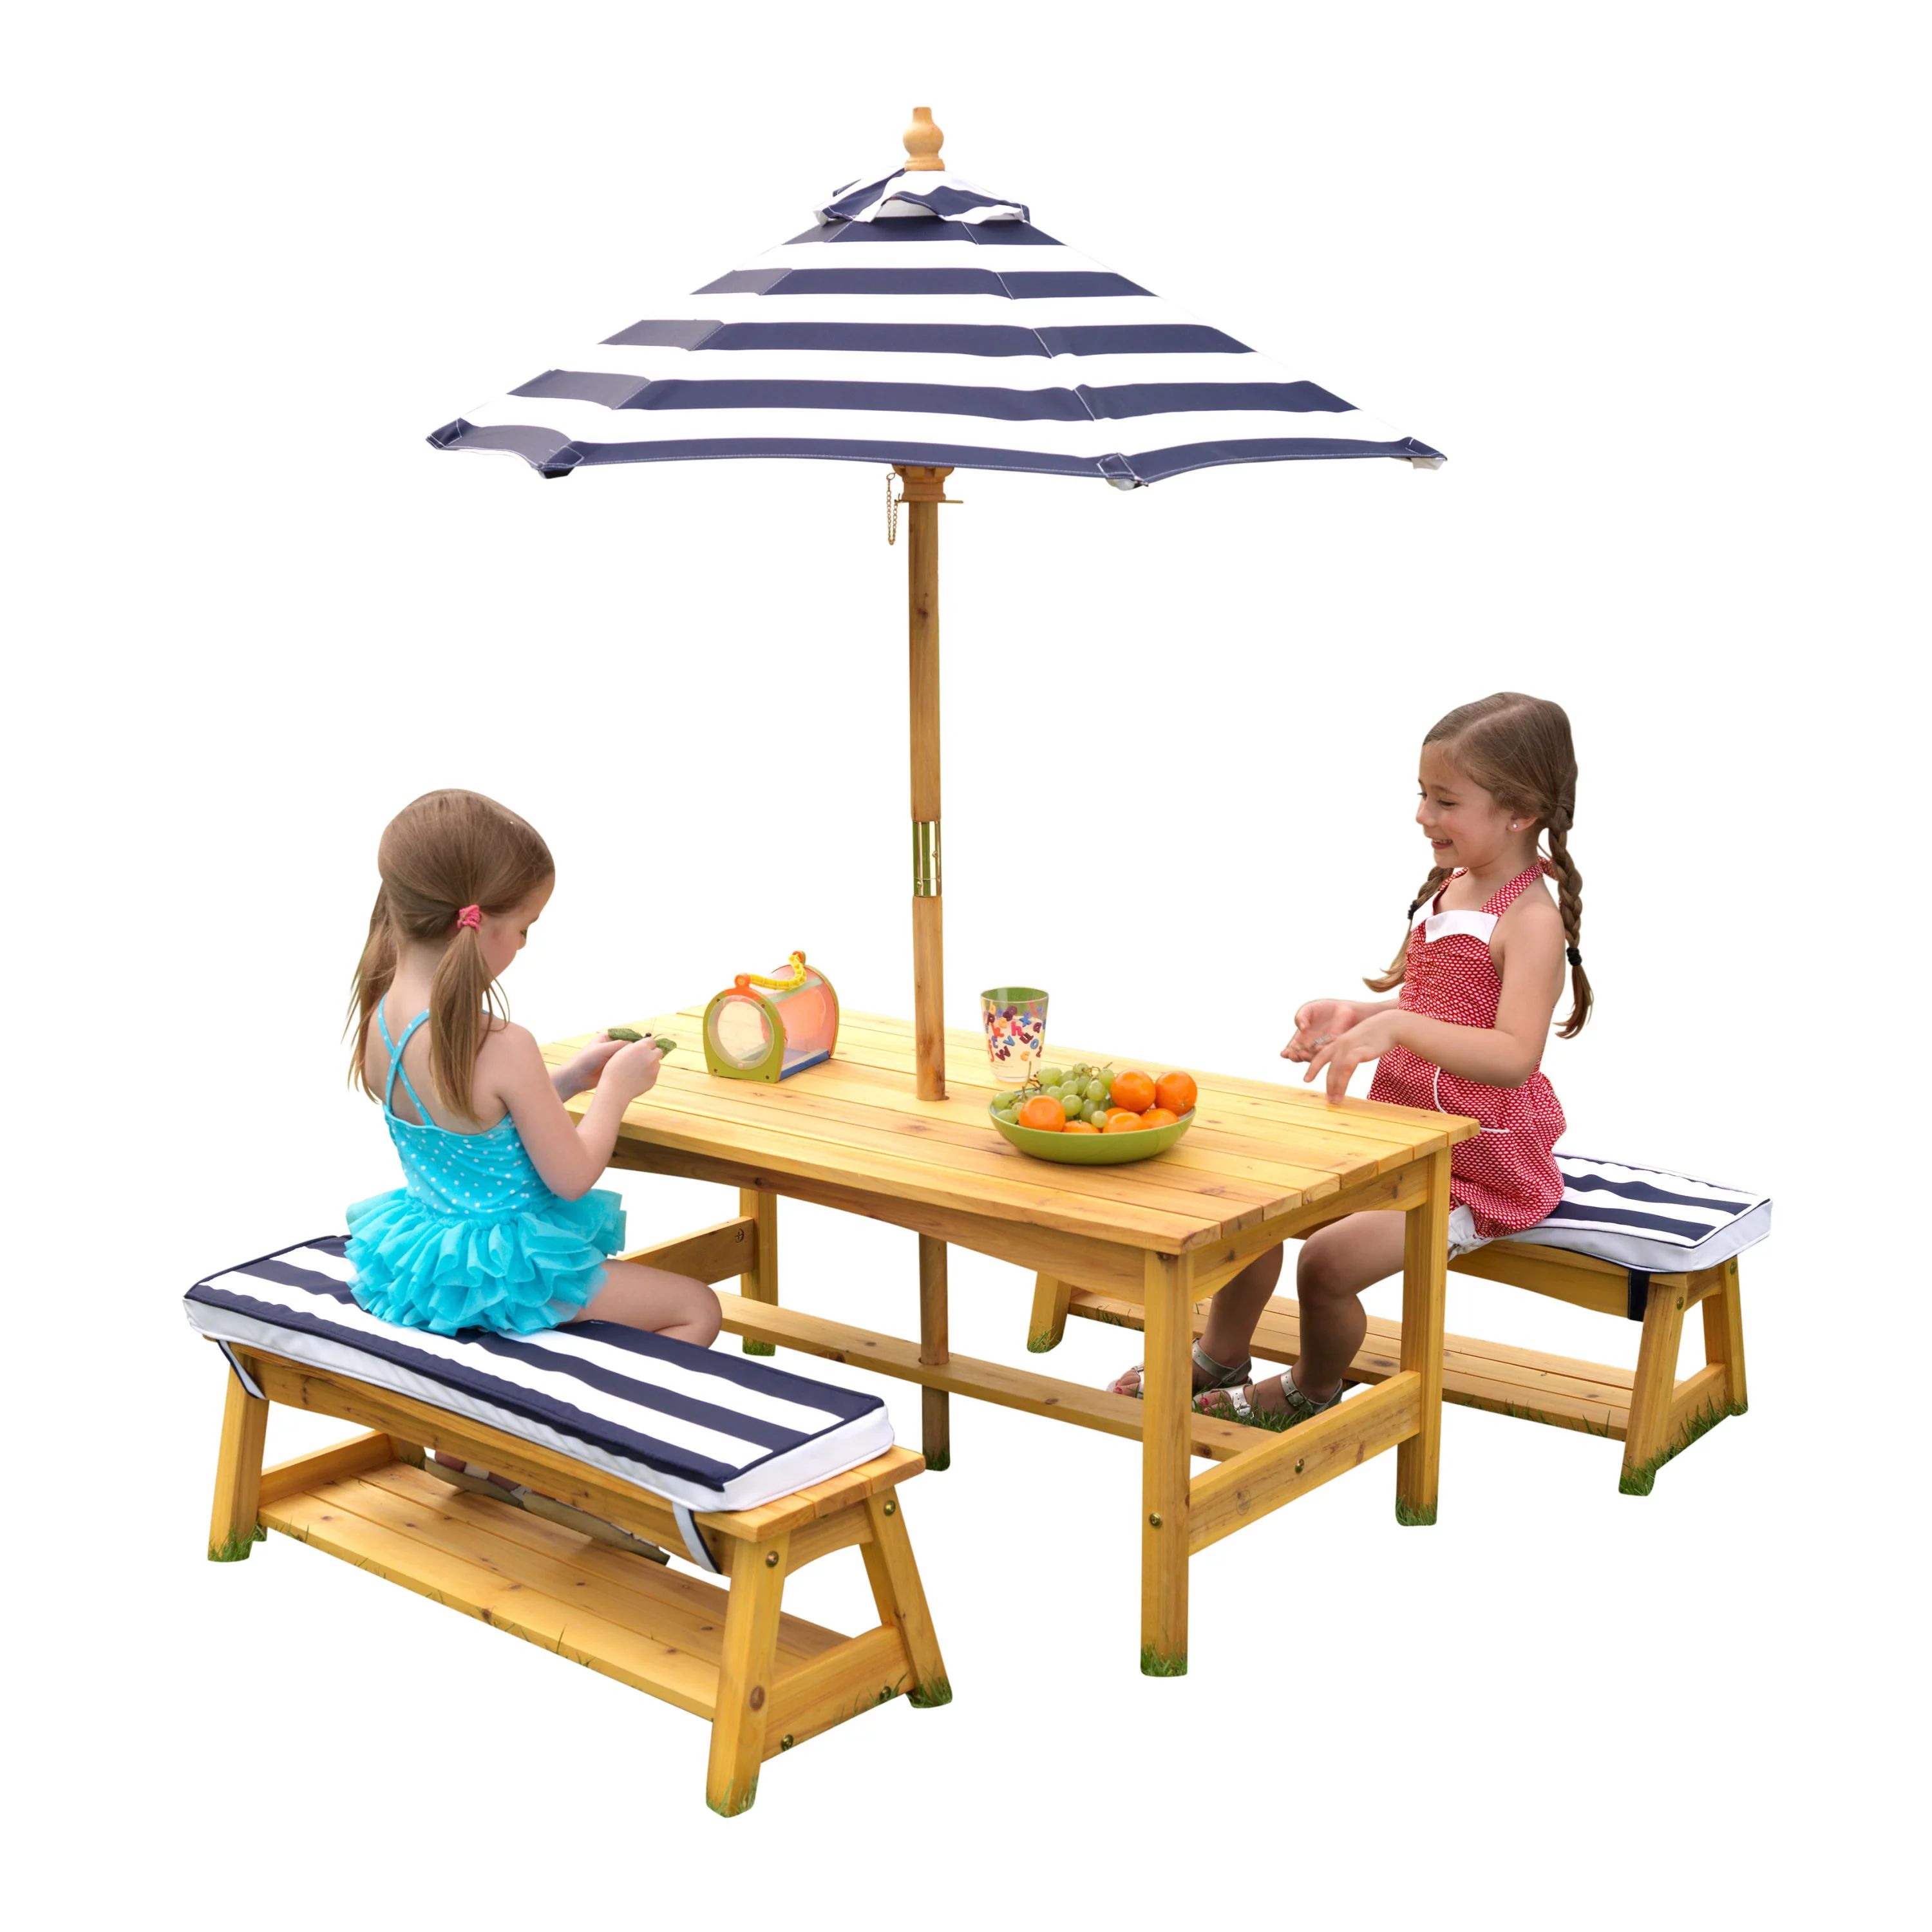 KidKraft Outdoor Table & Bench Set with Cushions & Umbrella - Navy & White Stripes | Walmart (US)